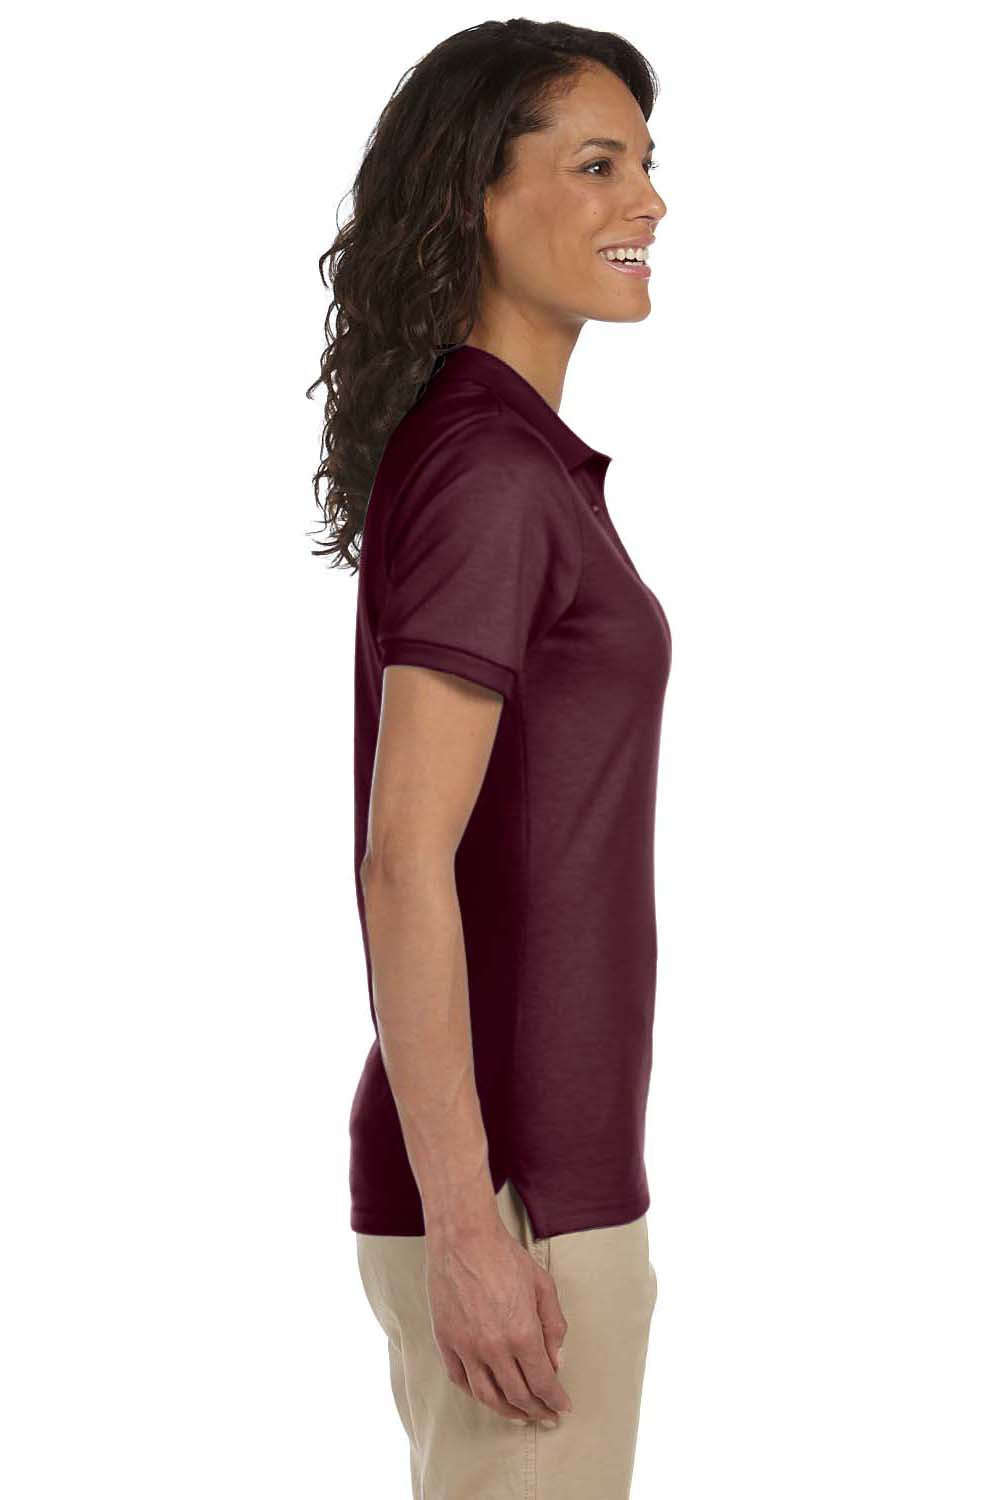 Jerzees 437W Womens SpotShield Stain Resistant Short Sleeve Polo Shirt Maroon Side